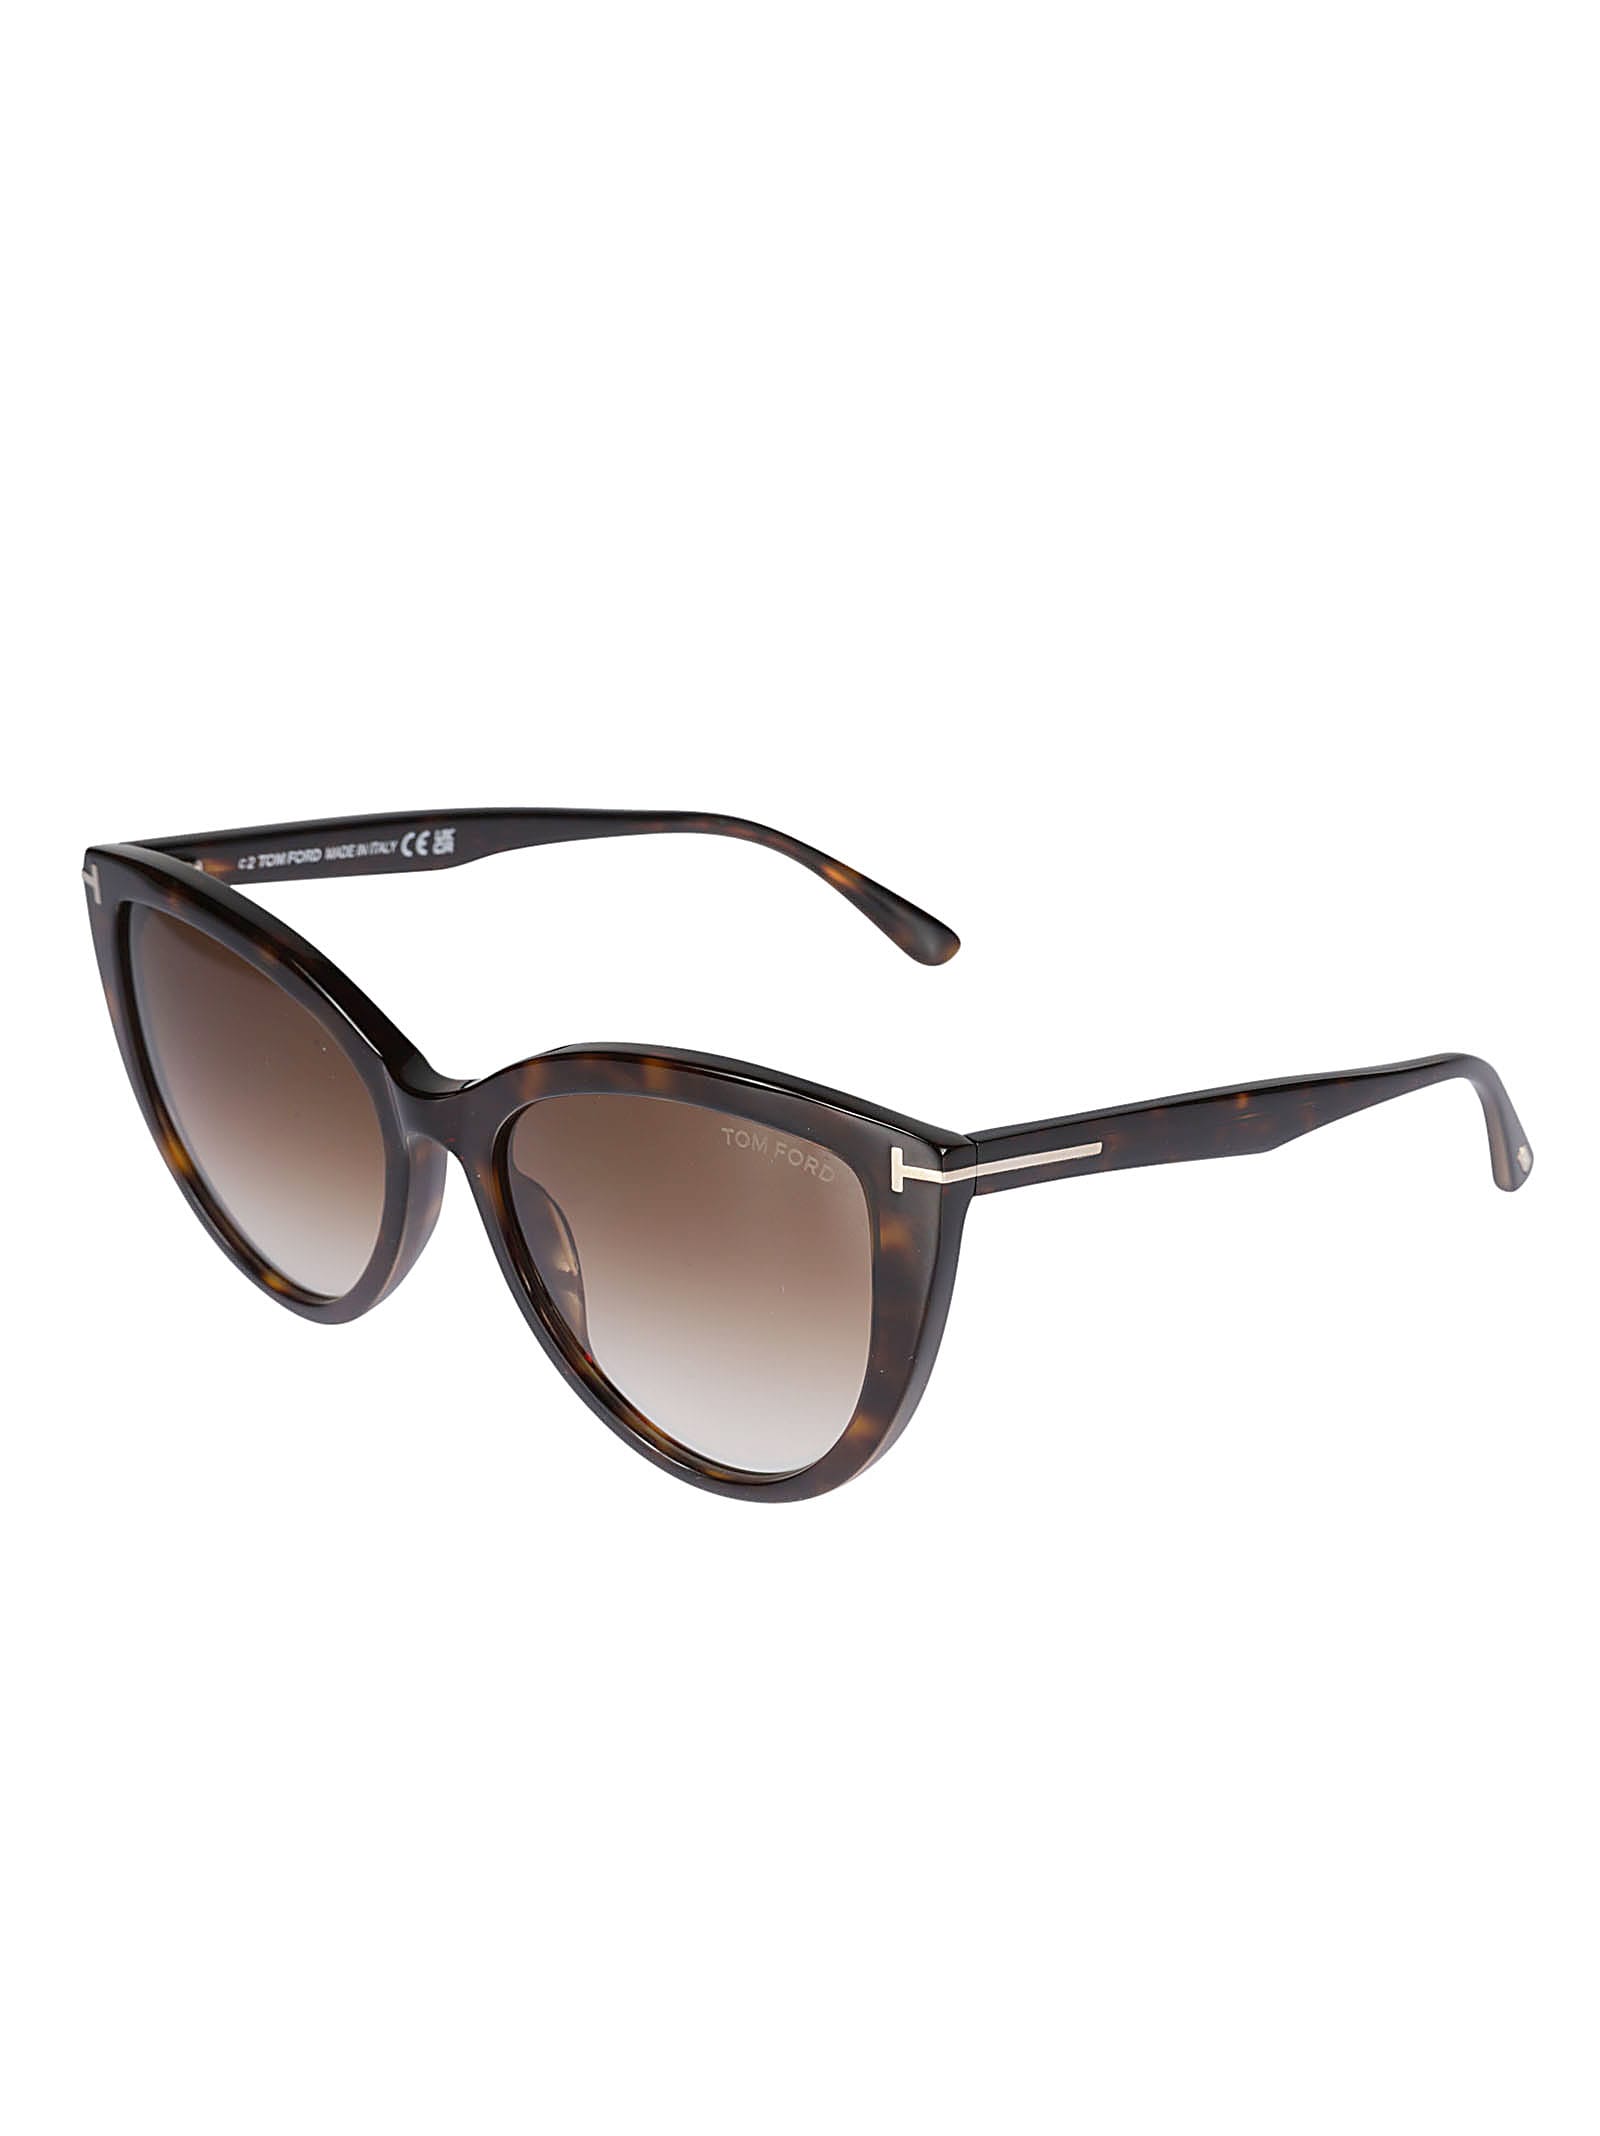 Tom Ford Isabella 02 Cat-eye Sunglasses In Nero | ModeSens